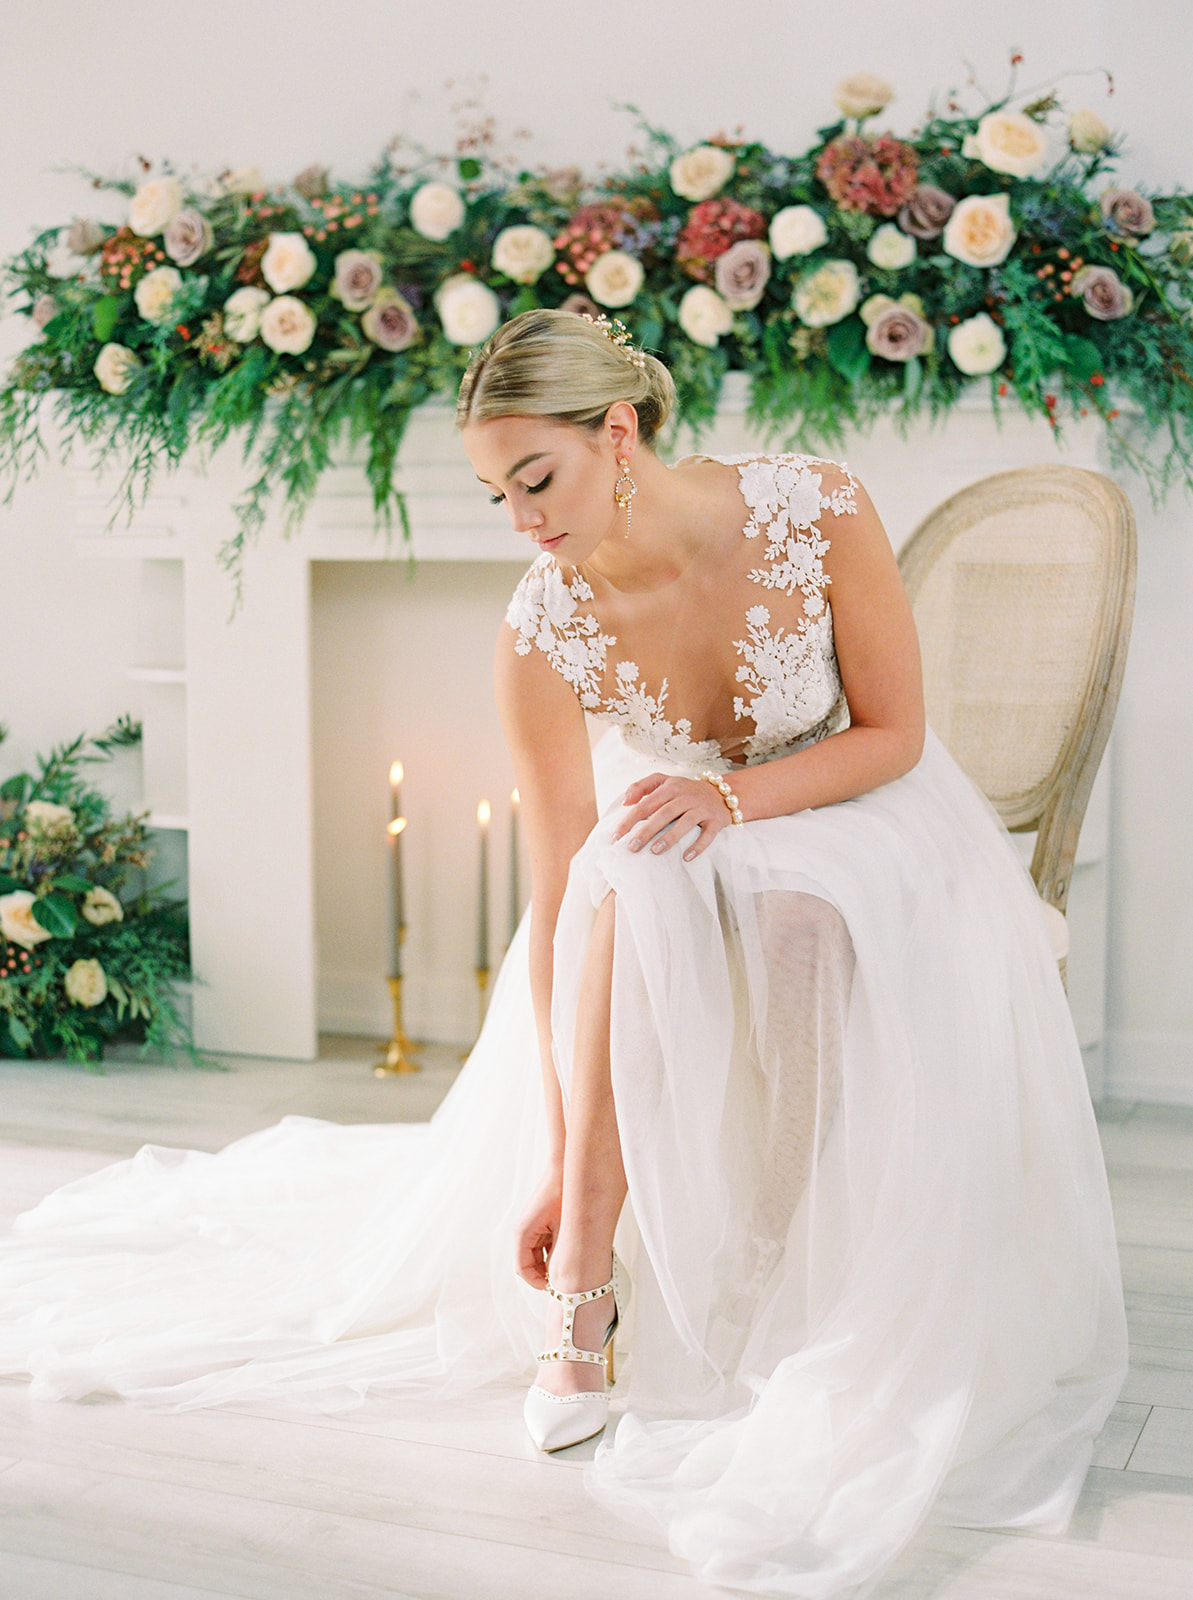 Elegant bride puts on her white high heels